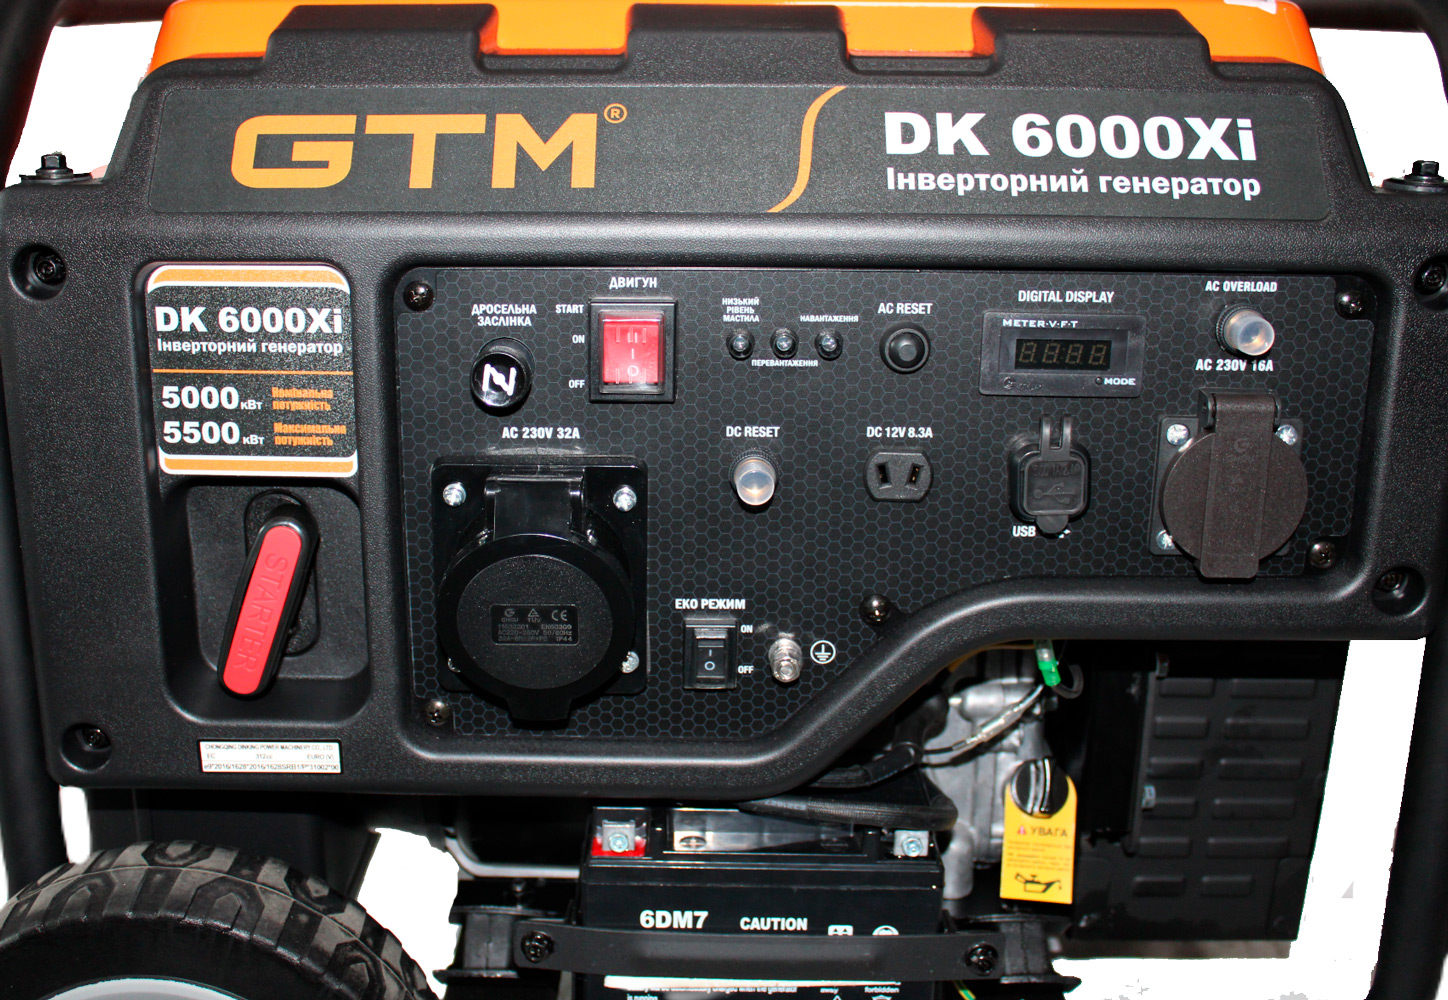 продаём GTM DK6000Xi в Украине - фото 4